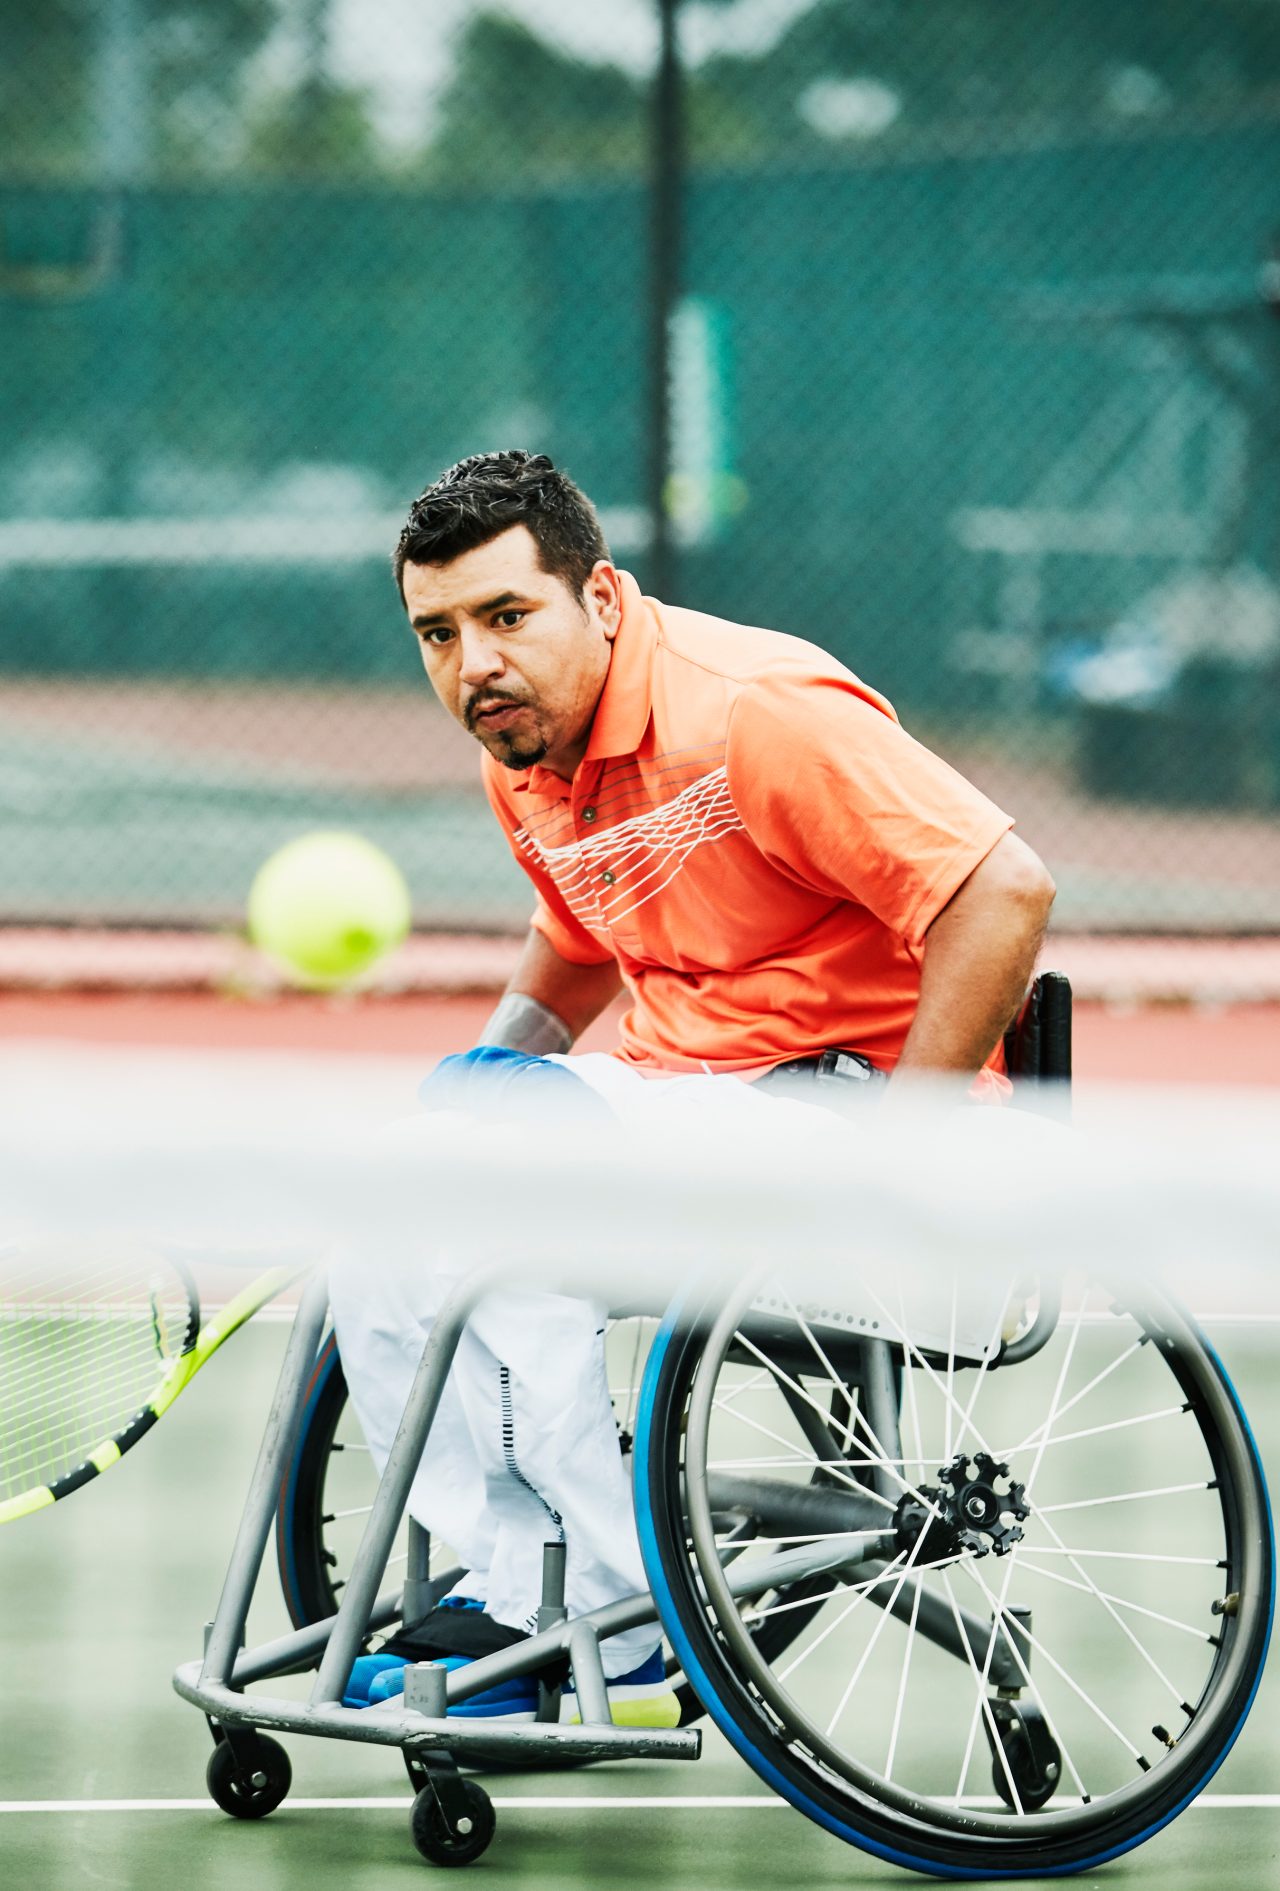 Adaptive athlete chasing down shot during wheelchair tennis match